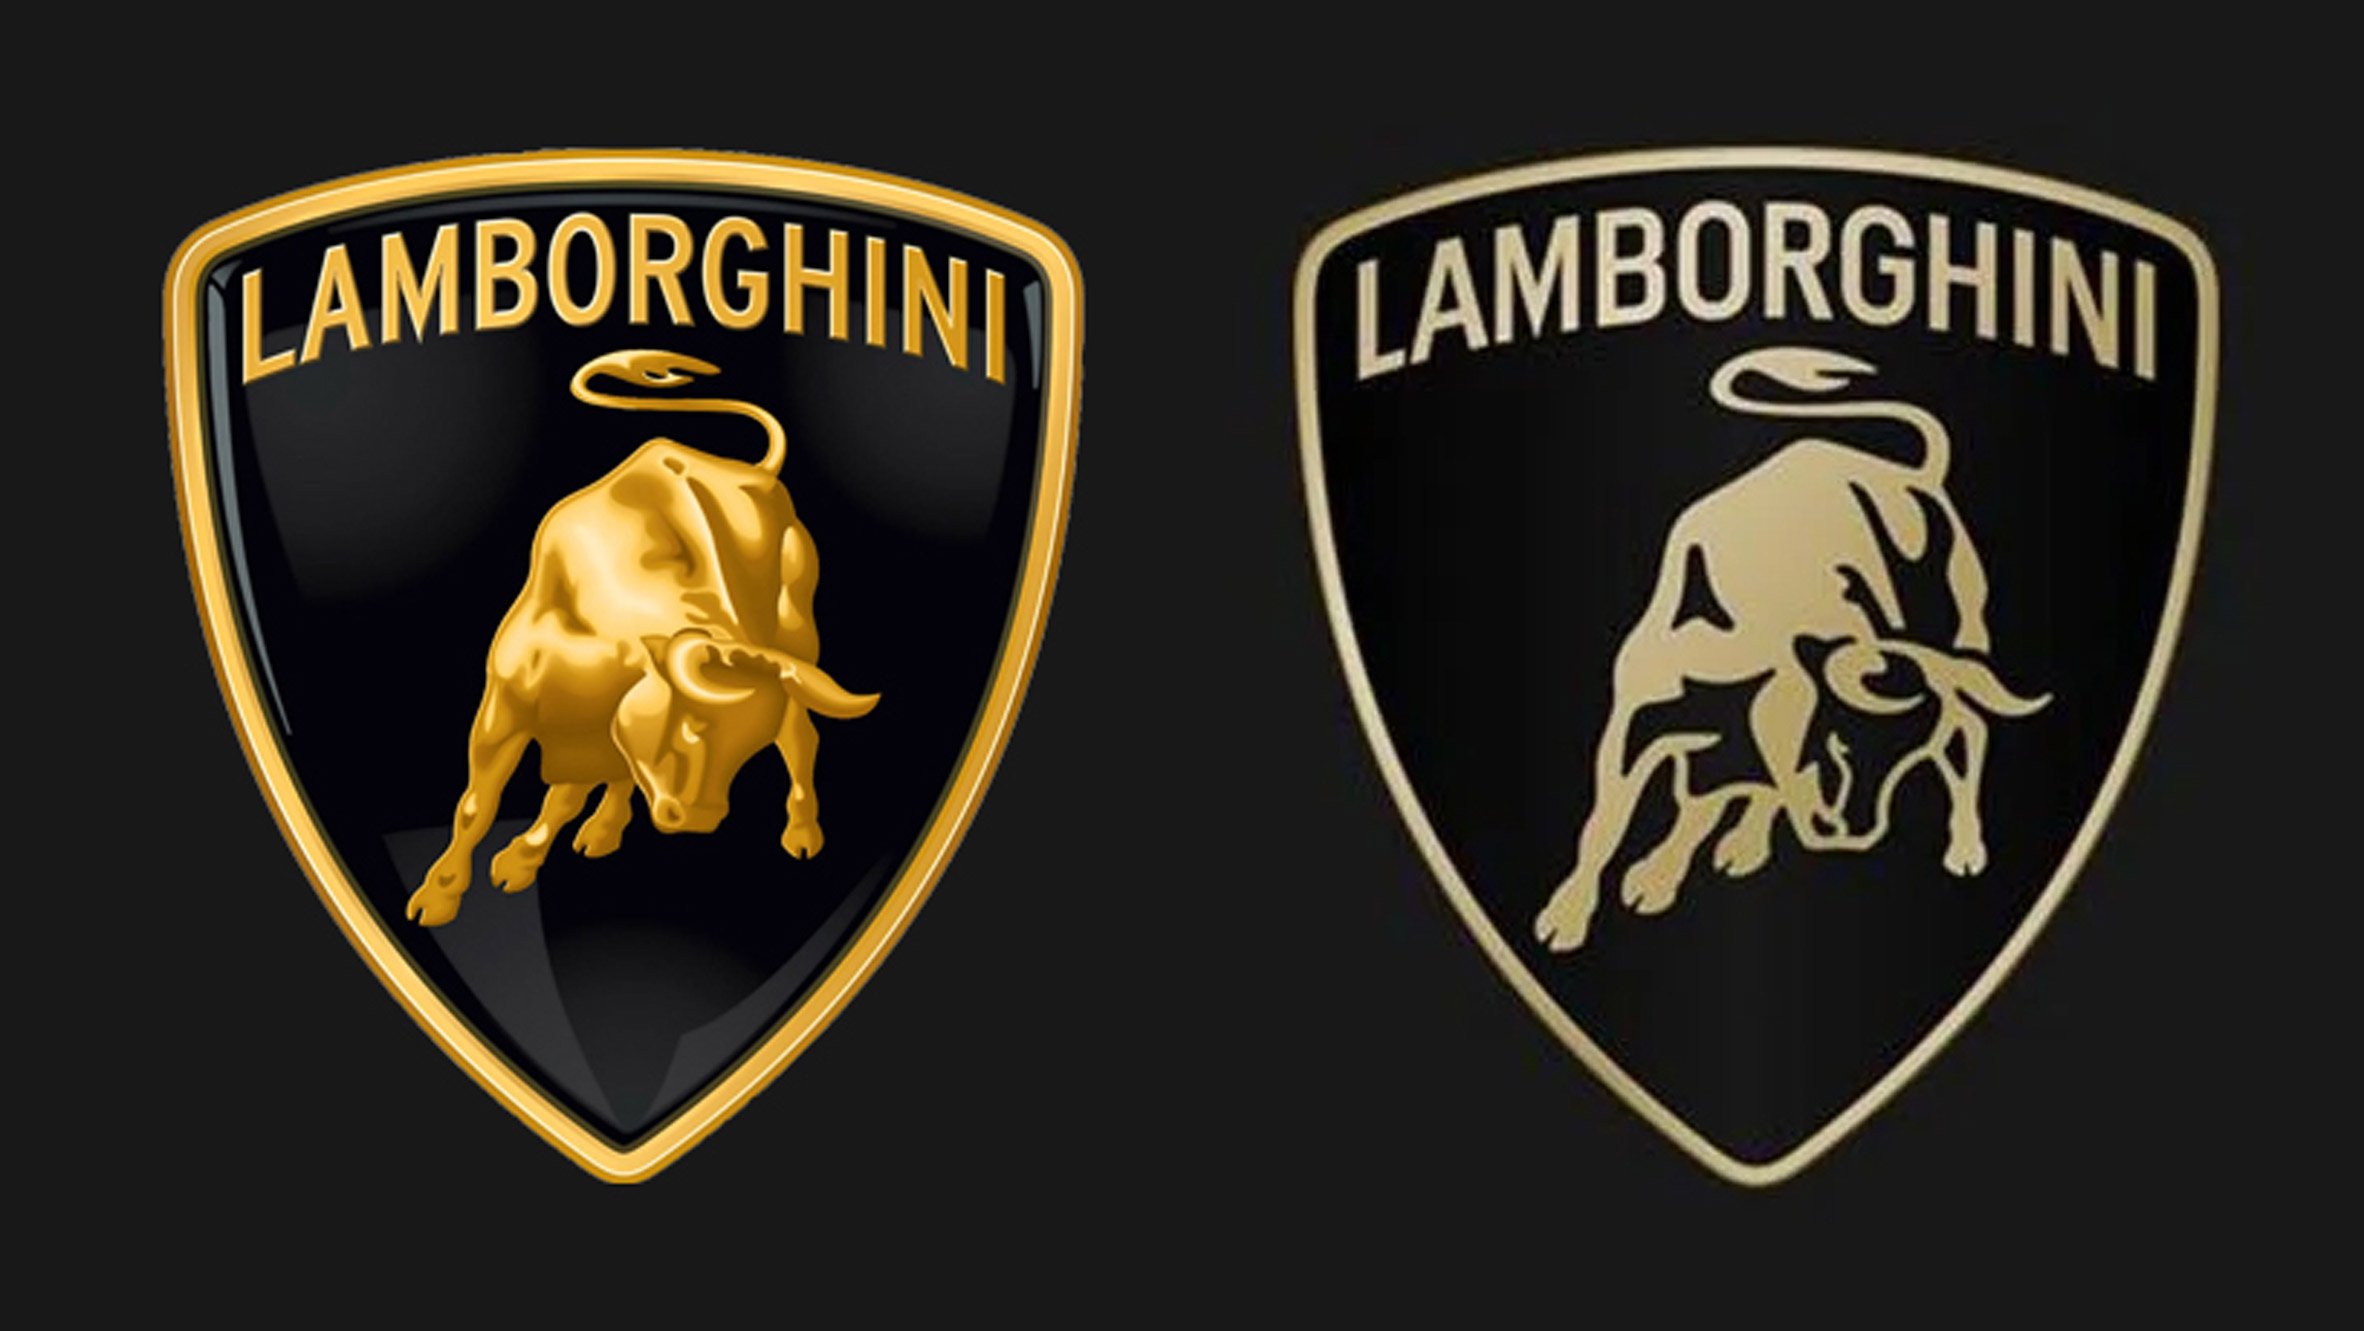 Lamborghini rebrand